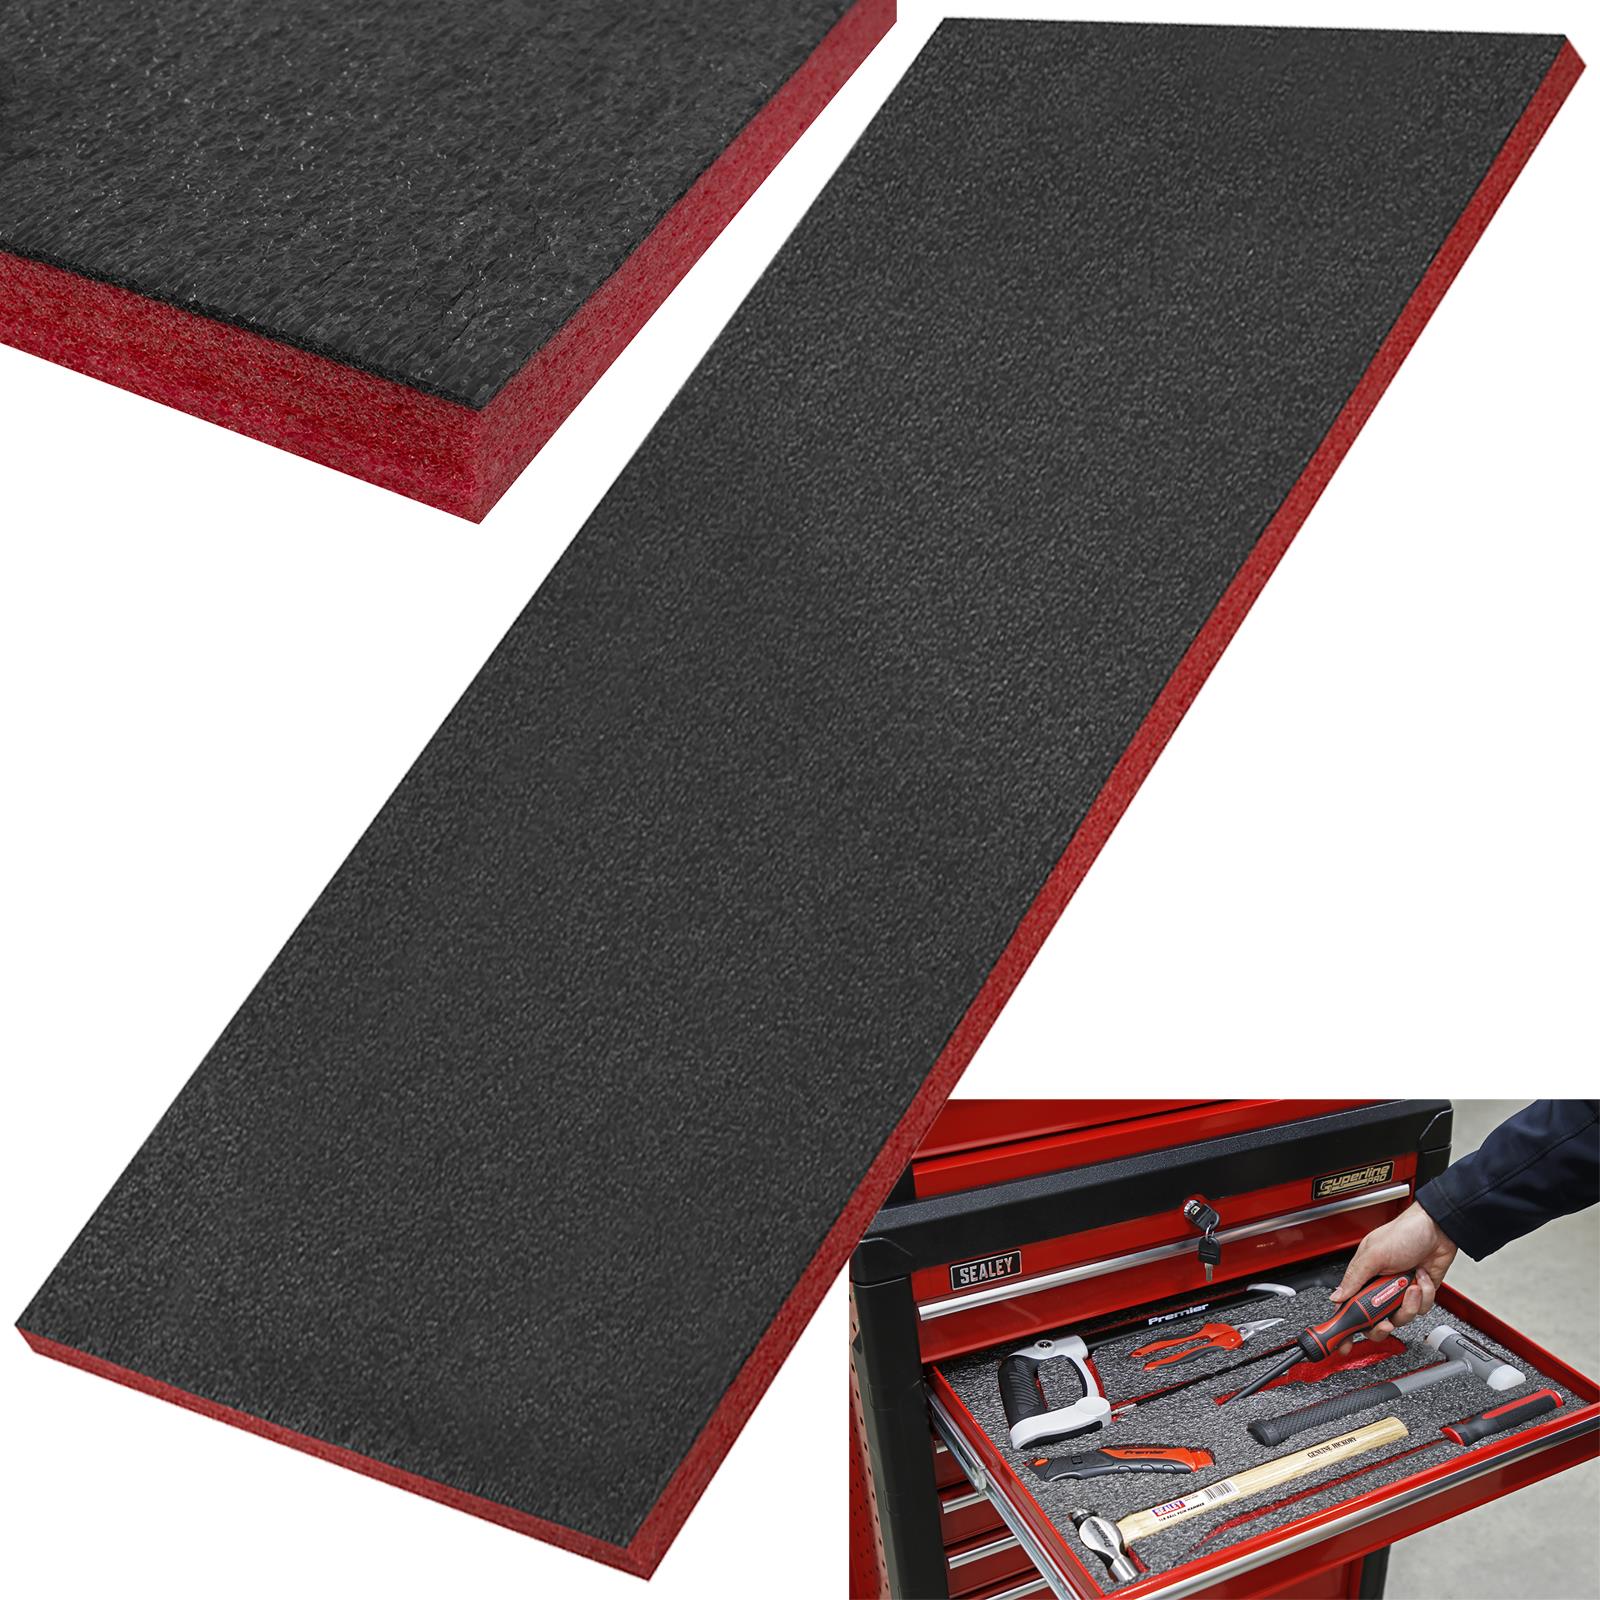 Sealey Easy Peel Shadow Foam Red Black 1200 x 550 x 30mm Tool Tray Insert